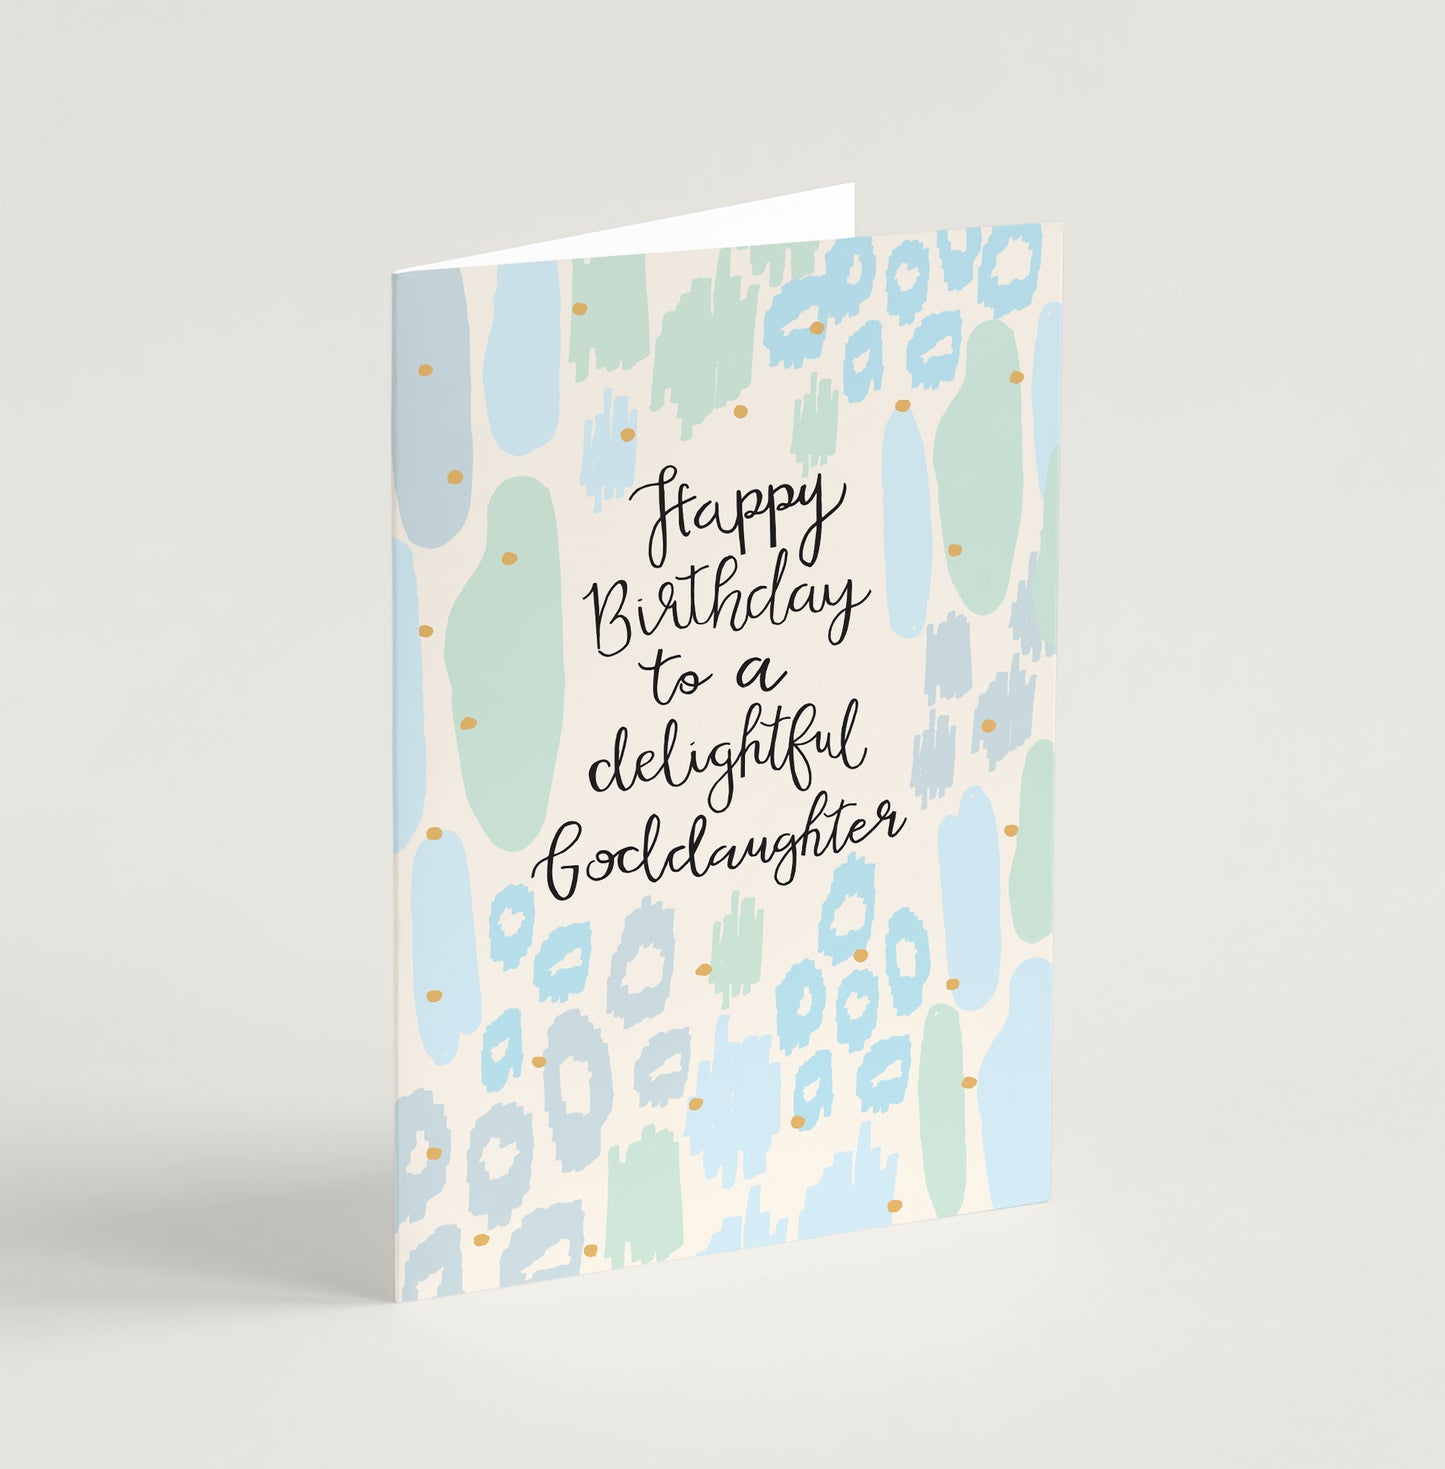 'Delightful Goddaughter' Birthday Card & Envelope